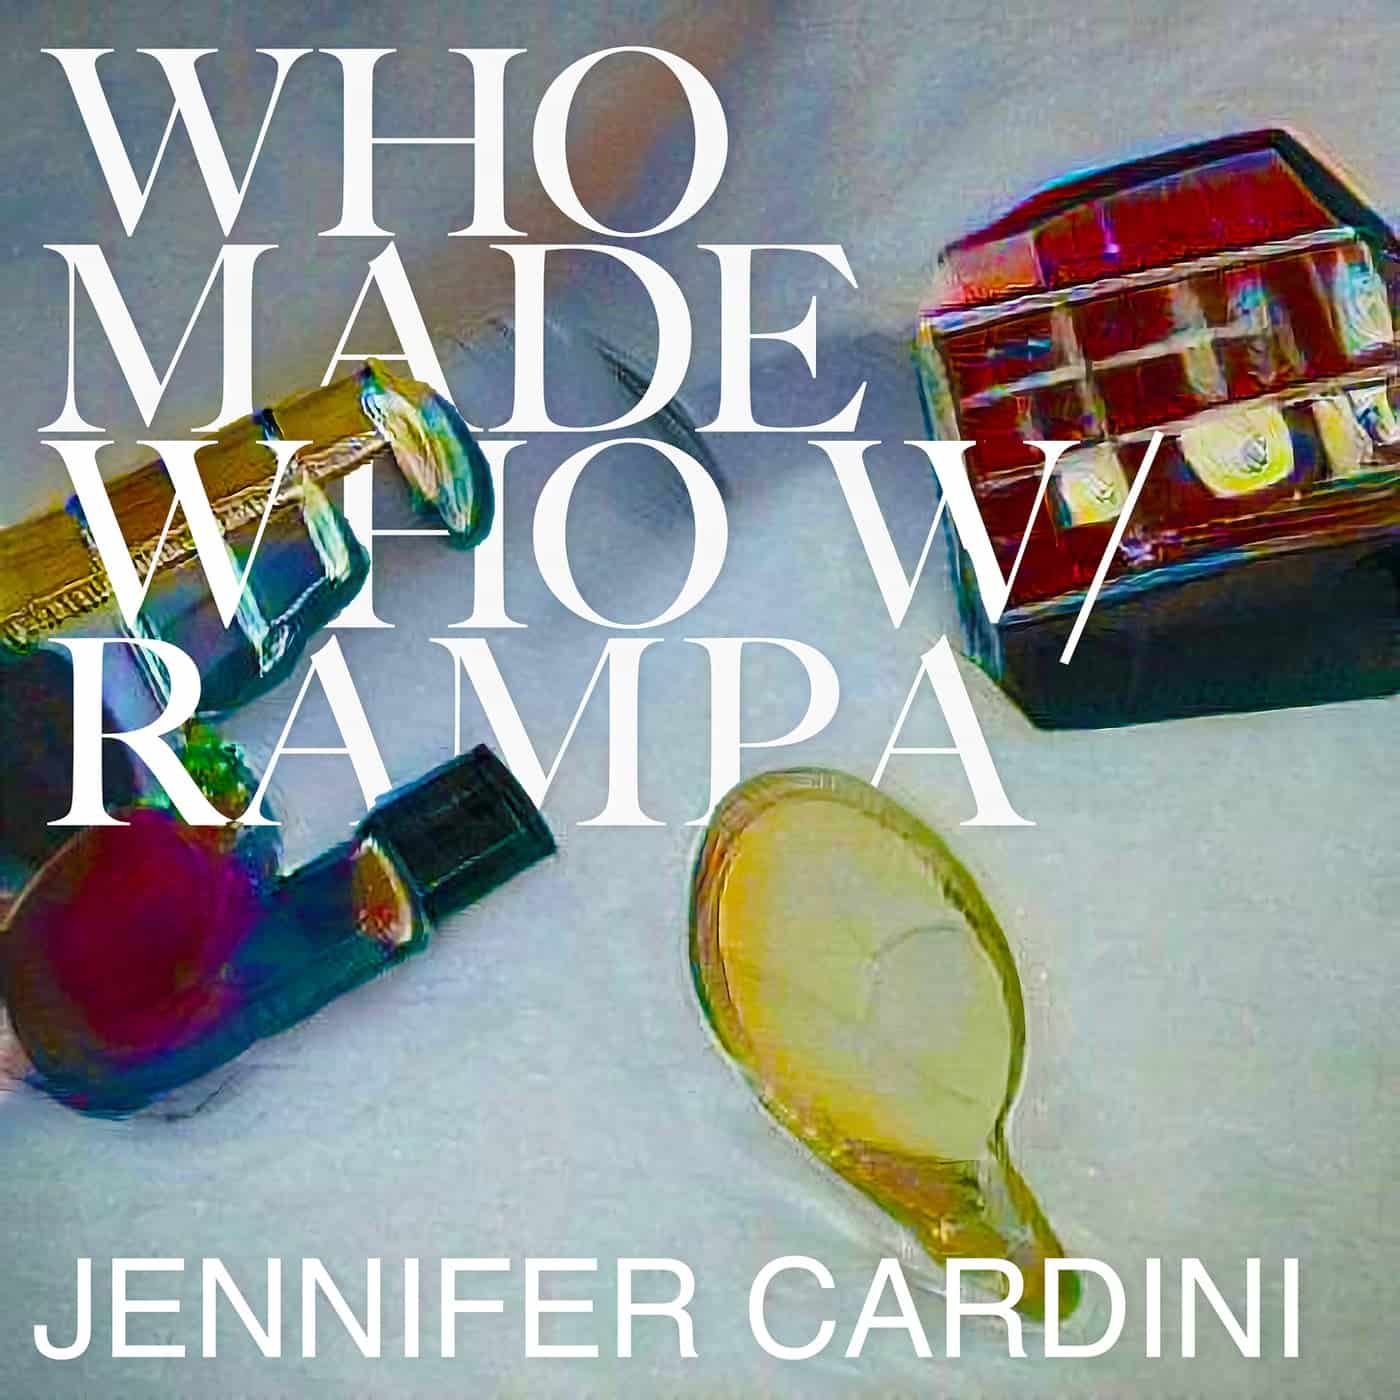 Download WhoMadeWho, Rampa - Everyday (Jennifer Cardini Remix) on Electrobuzz